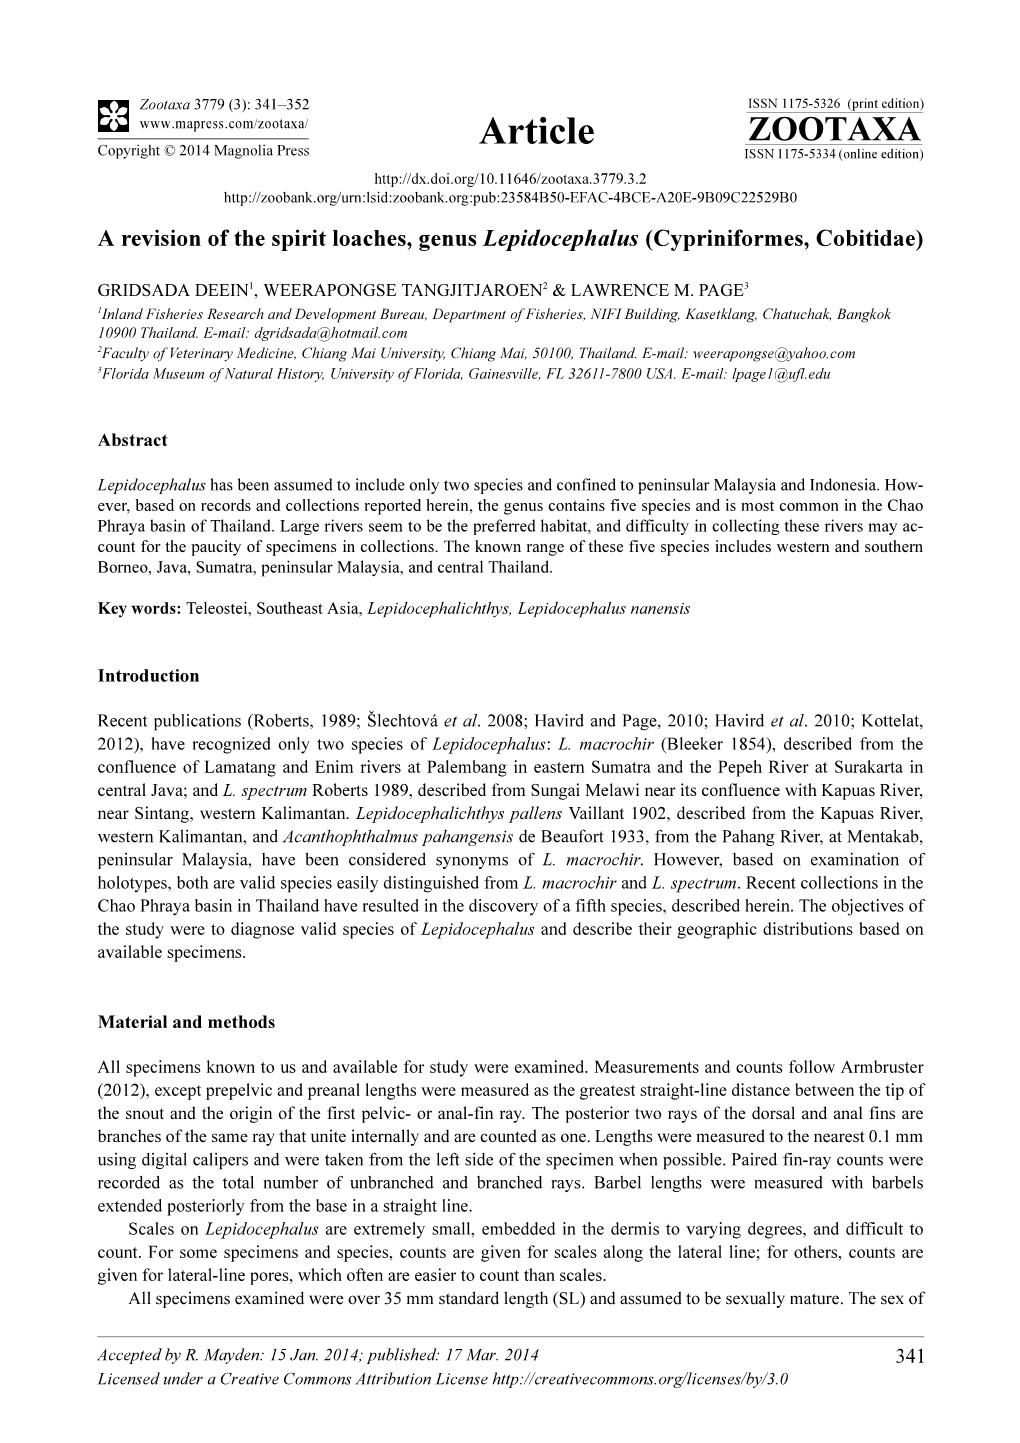 A Revision of the Spirit Loaches, Genus Lepidocephalus (Cypriniformes, Cobitidae)